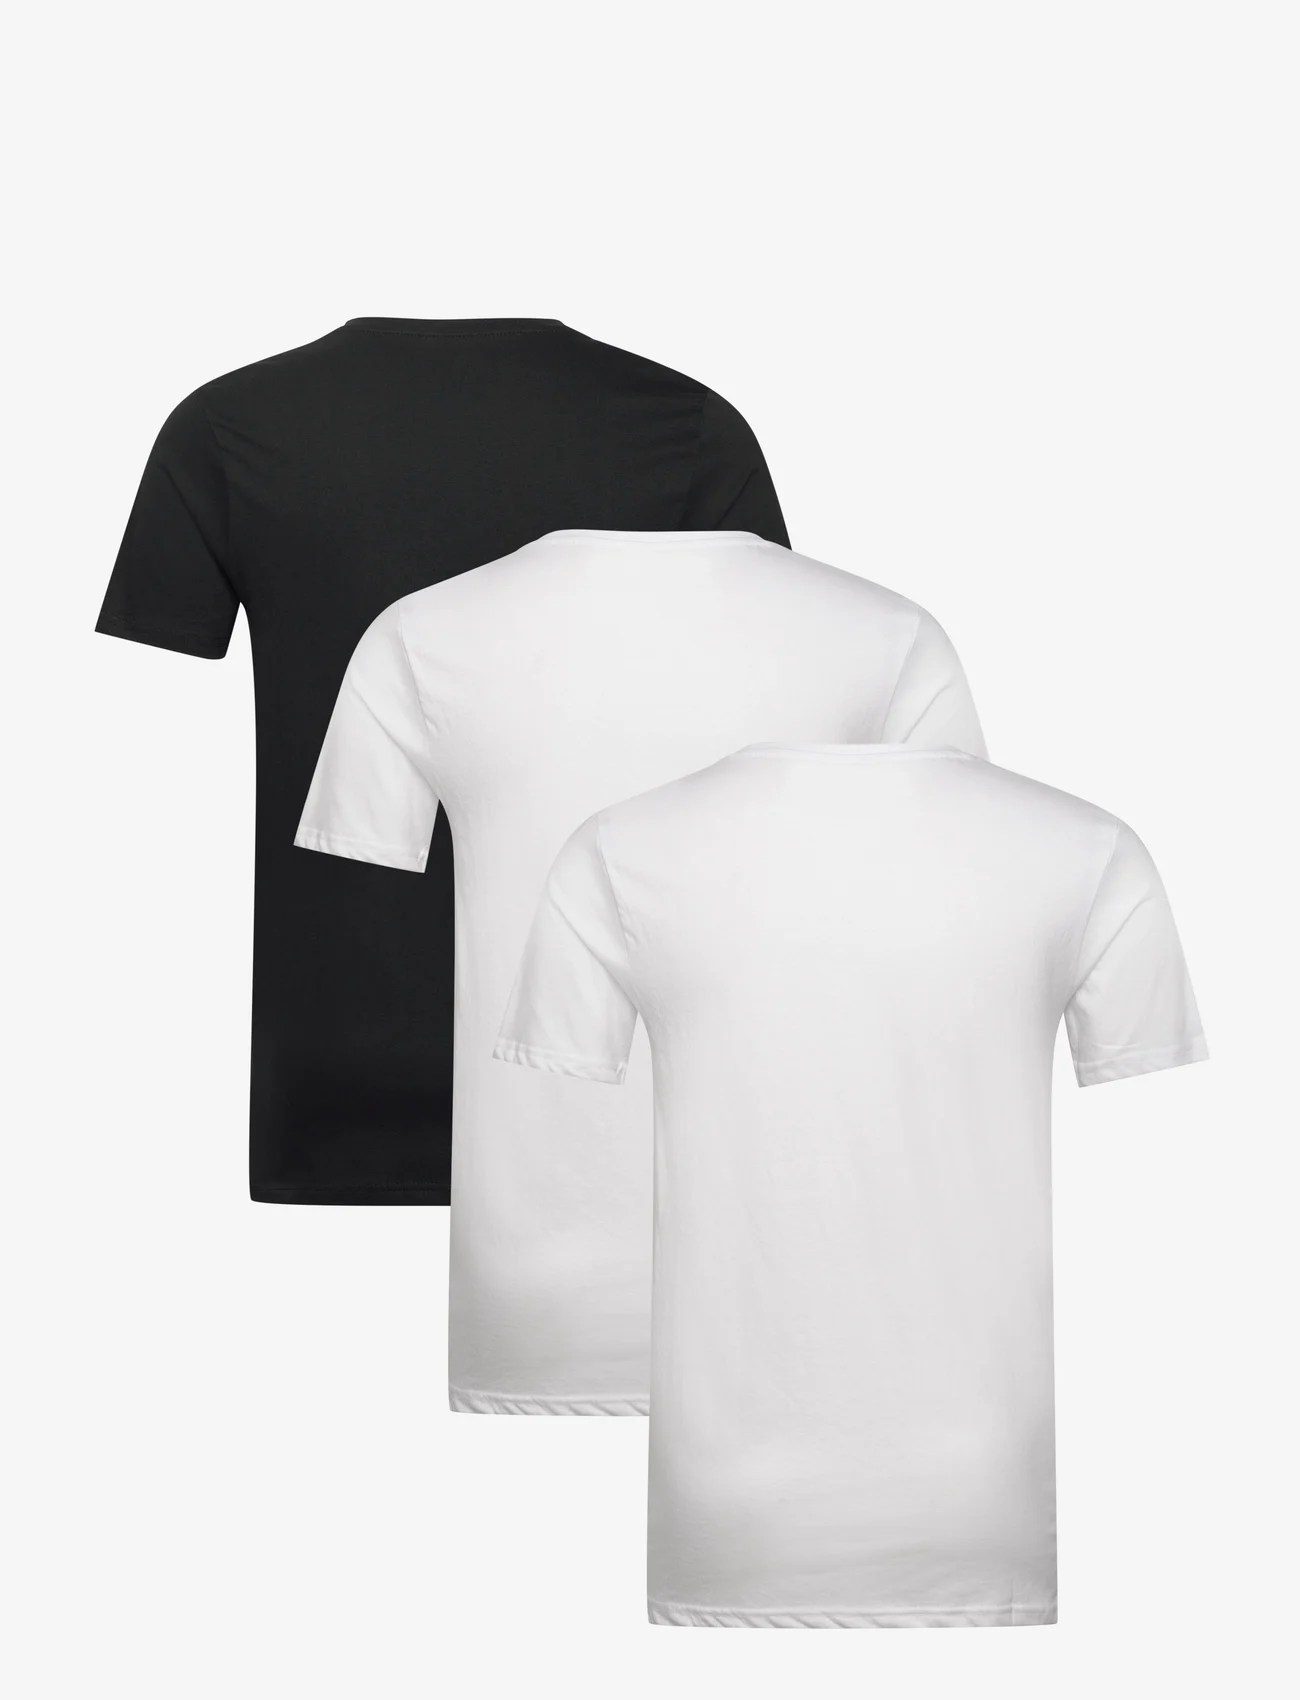 Denim project - 3 PACK T-SHIRTS - lägsta priserna - 2x white 1x black - 1